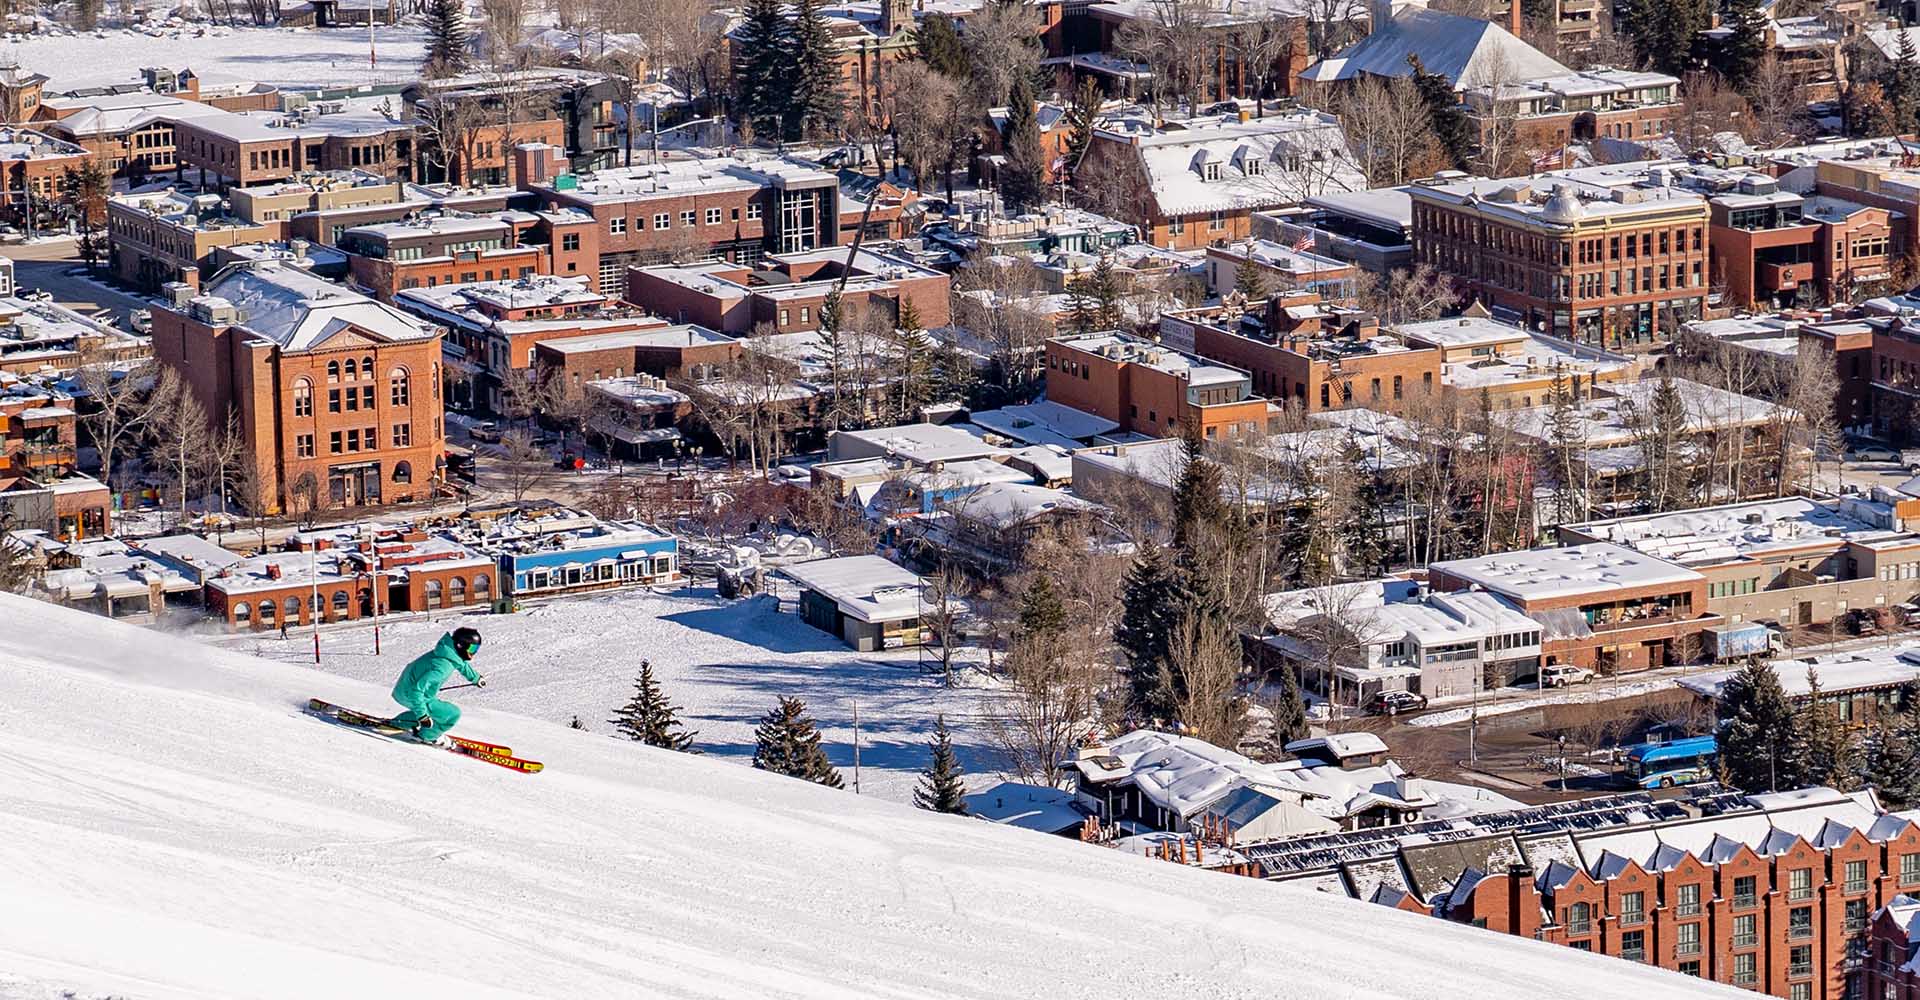 Aspen Mountain Skier and Town